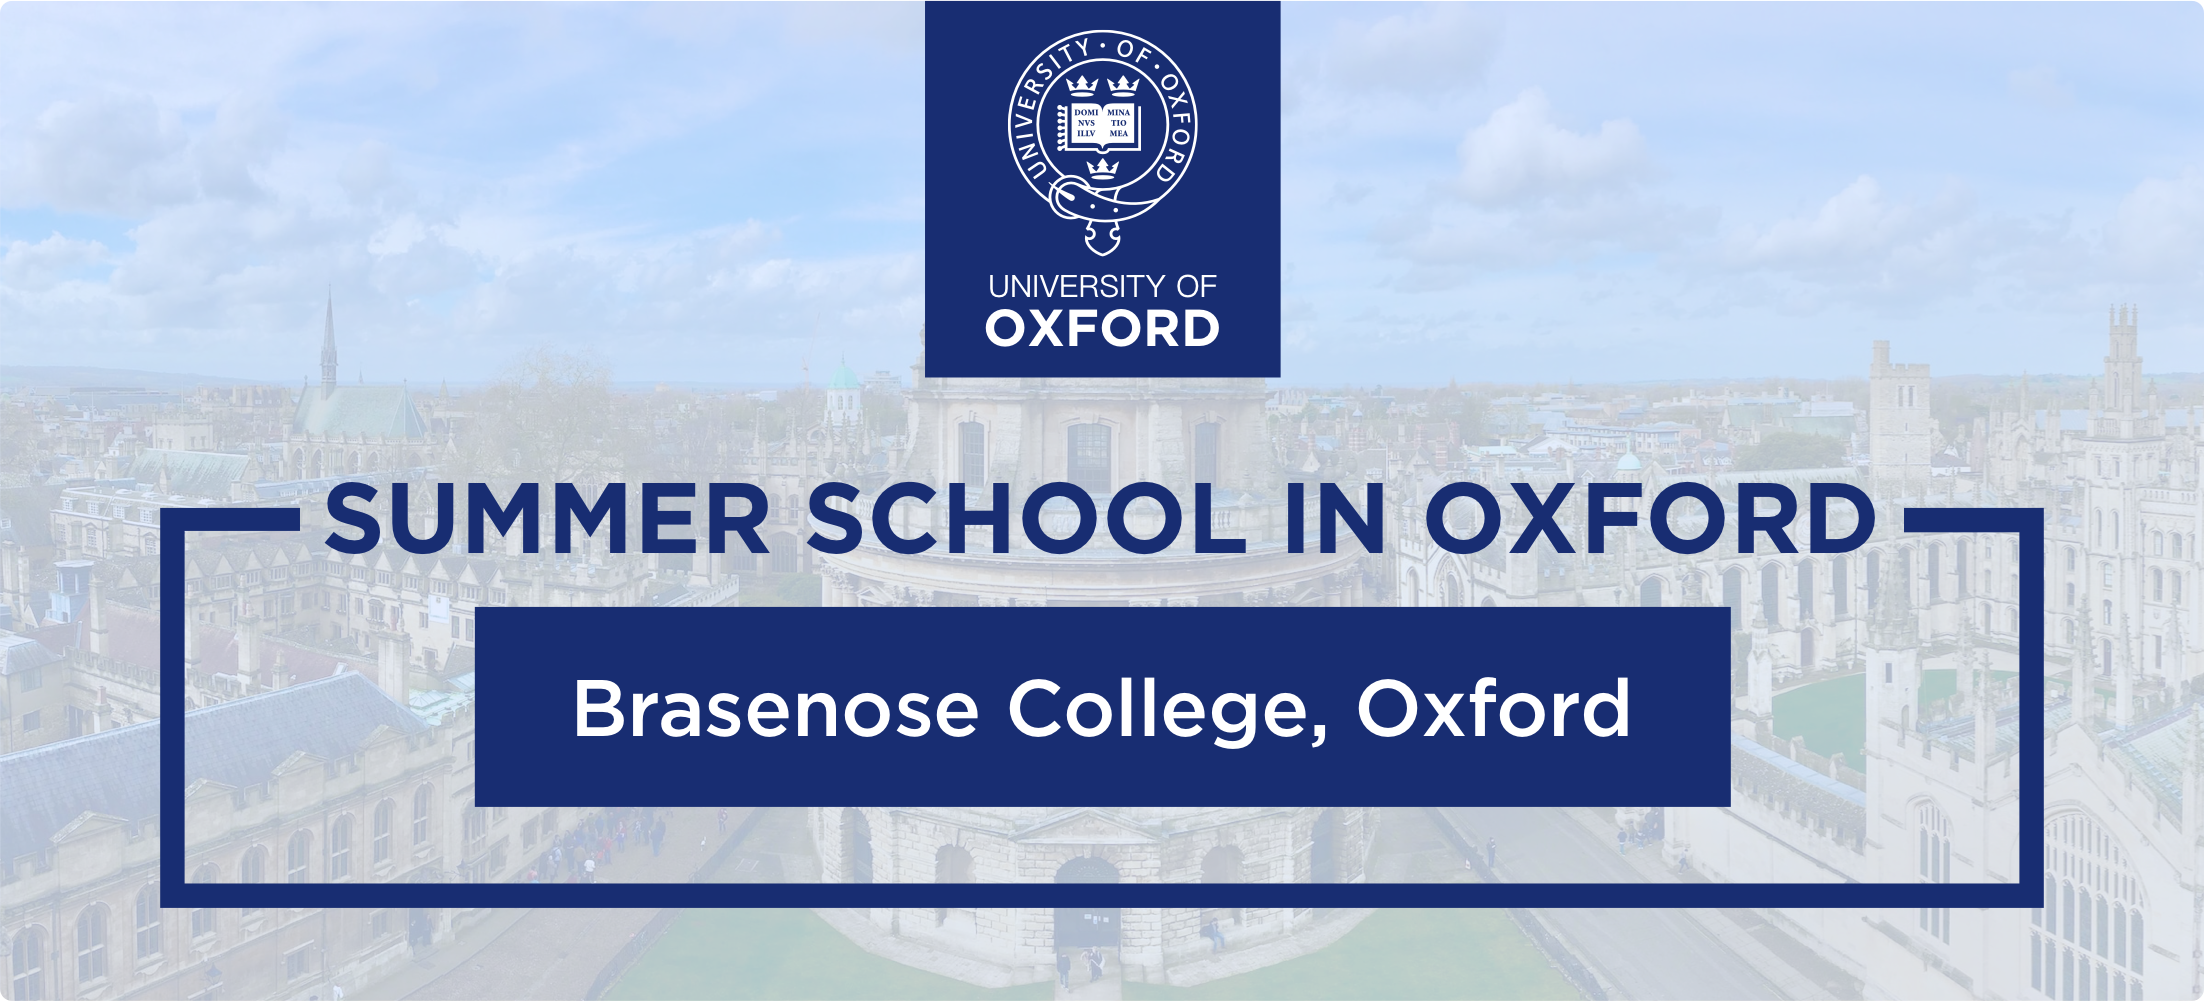 Oxford Brasenose College Summer School